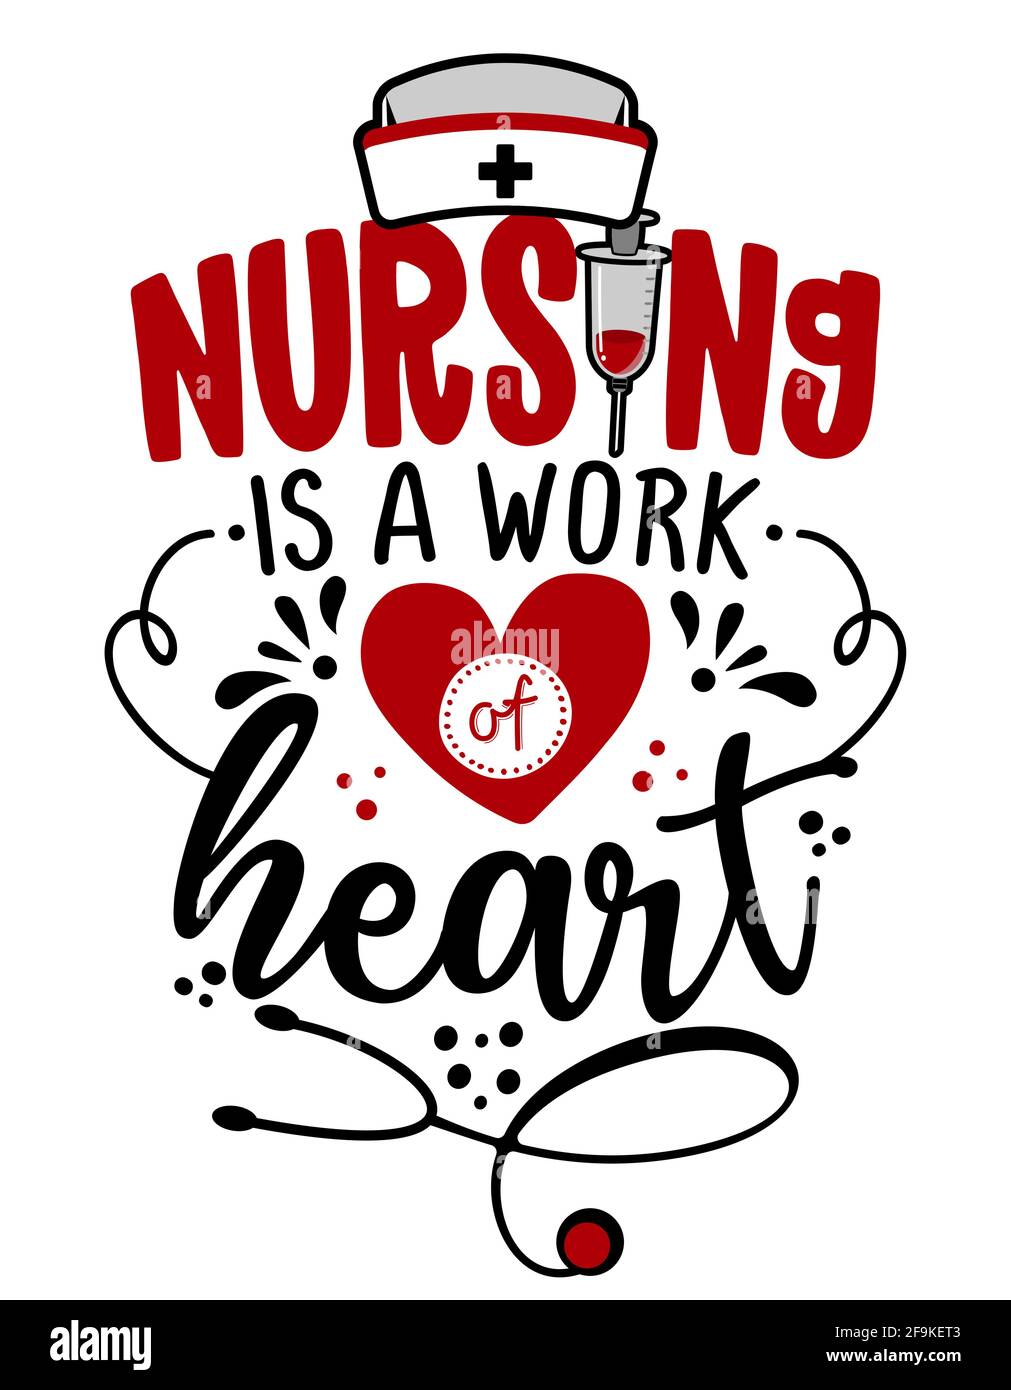 Nursing is the work of heart - STOP coronavirus (2019-ncov) Nurse t-shirt. Nursing, doctor, practitioner, nurse practitioner t shirt design template, Stock Vector